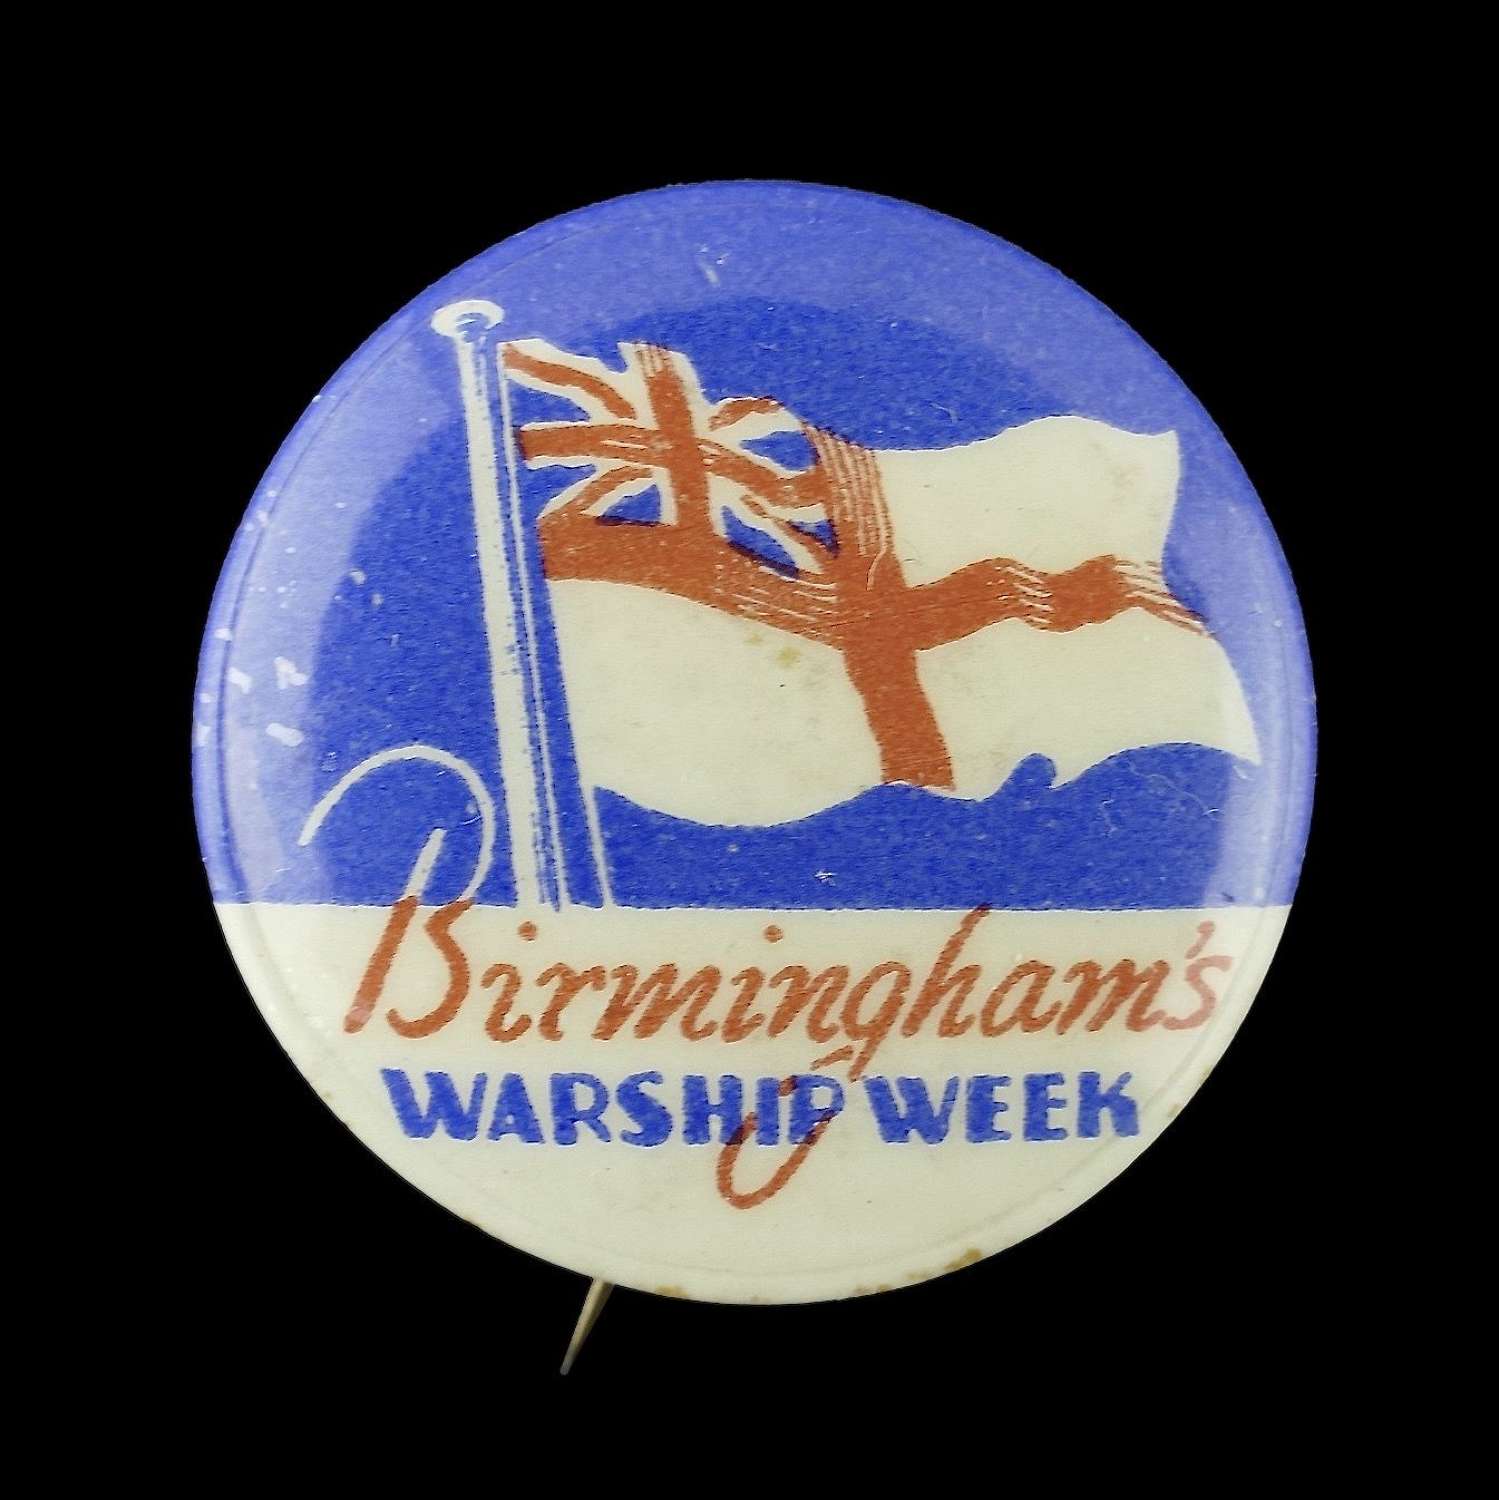 Birmingham's Warship Week badge